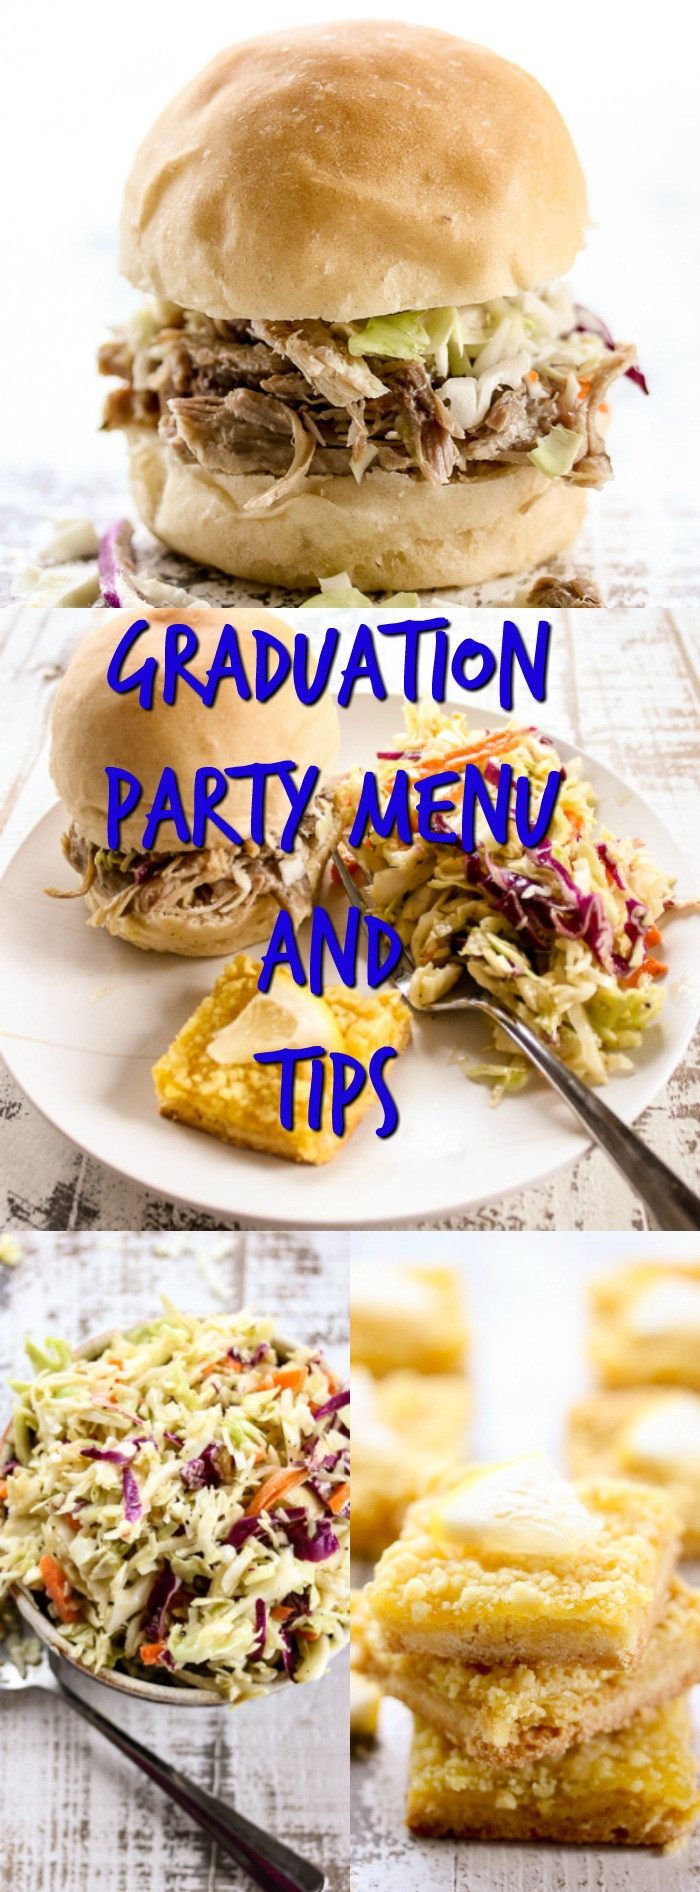 Party Food Menu Ideas
 Graduation Party Menu and Tips Lisa s Dinnertime Dish